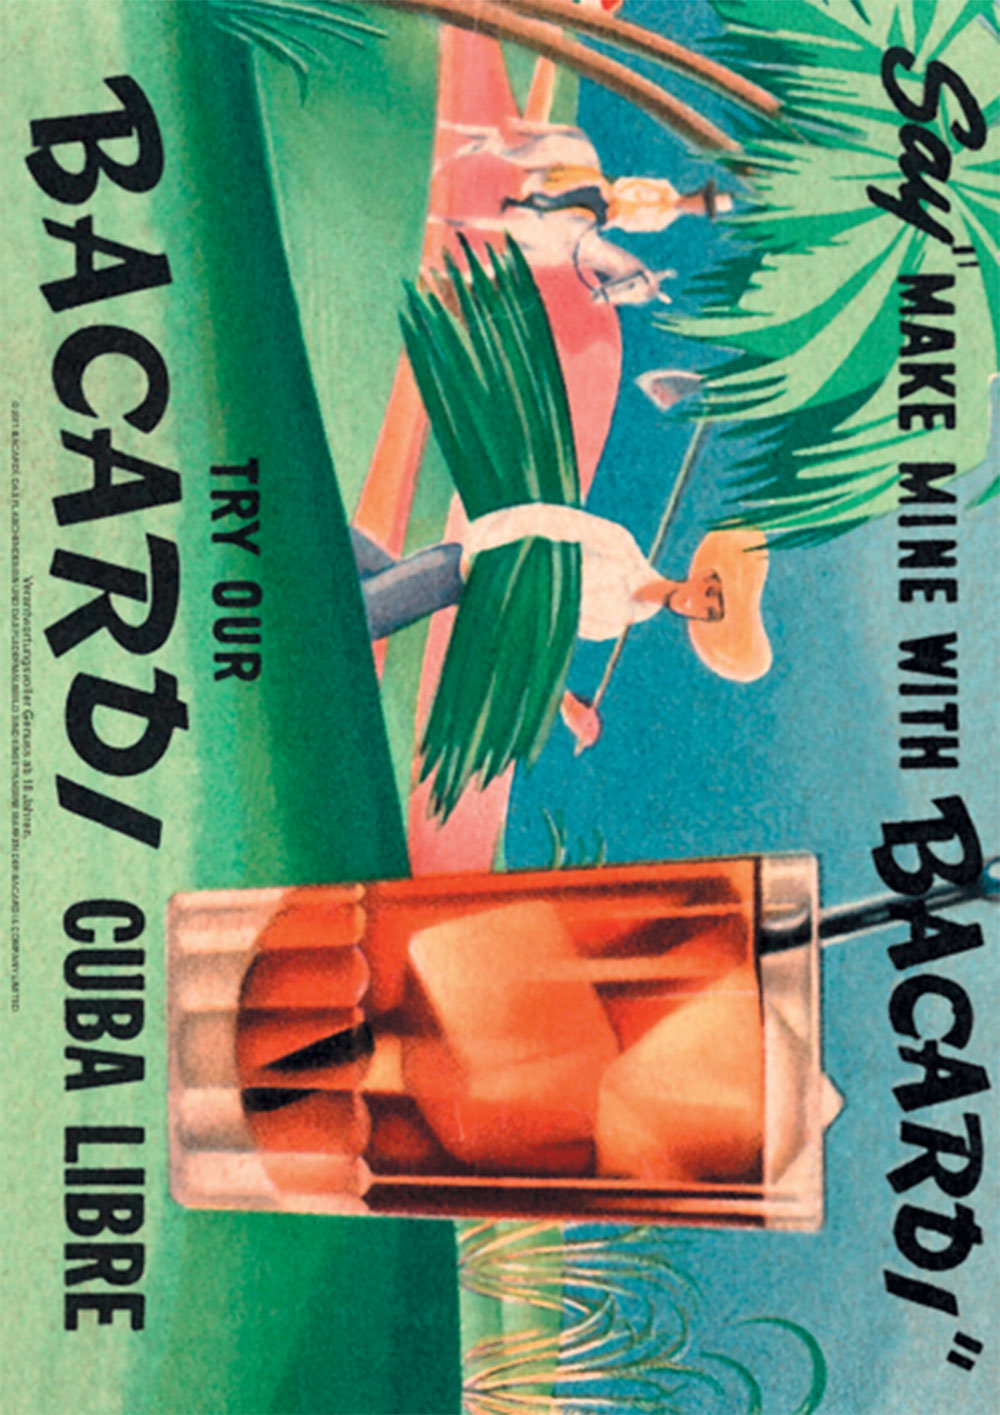 Bacardi Geschenkset - Gläser / Cola / Bacardi Carta Negra Rum 0,7l 700ml (40% Vol) + 2er Set Gläser + 2x Coca Cola 0,2L Inkl. Pfand MEHRWEG- [Enthält Sulfite]